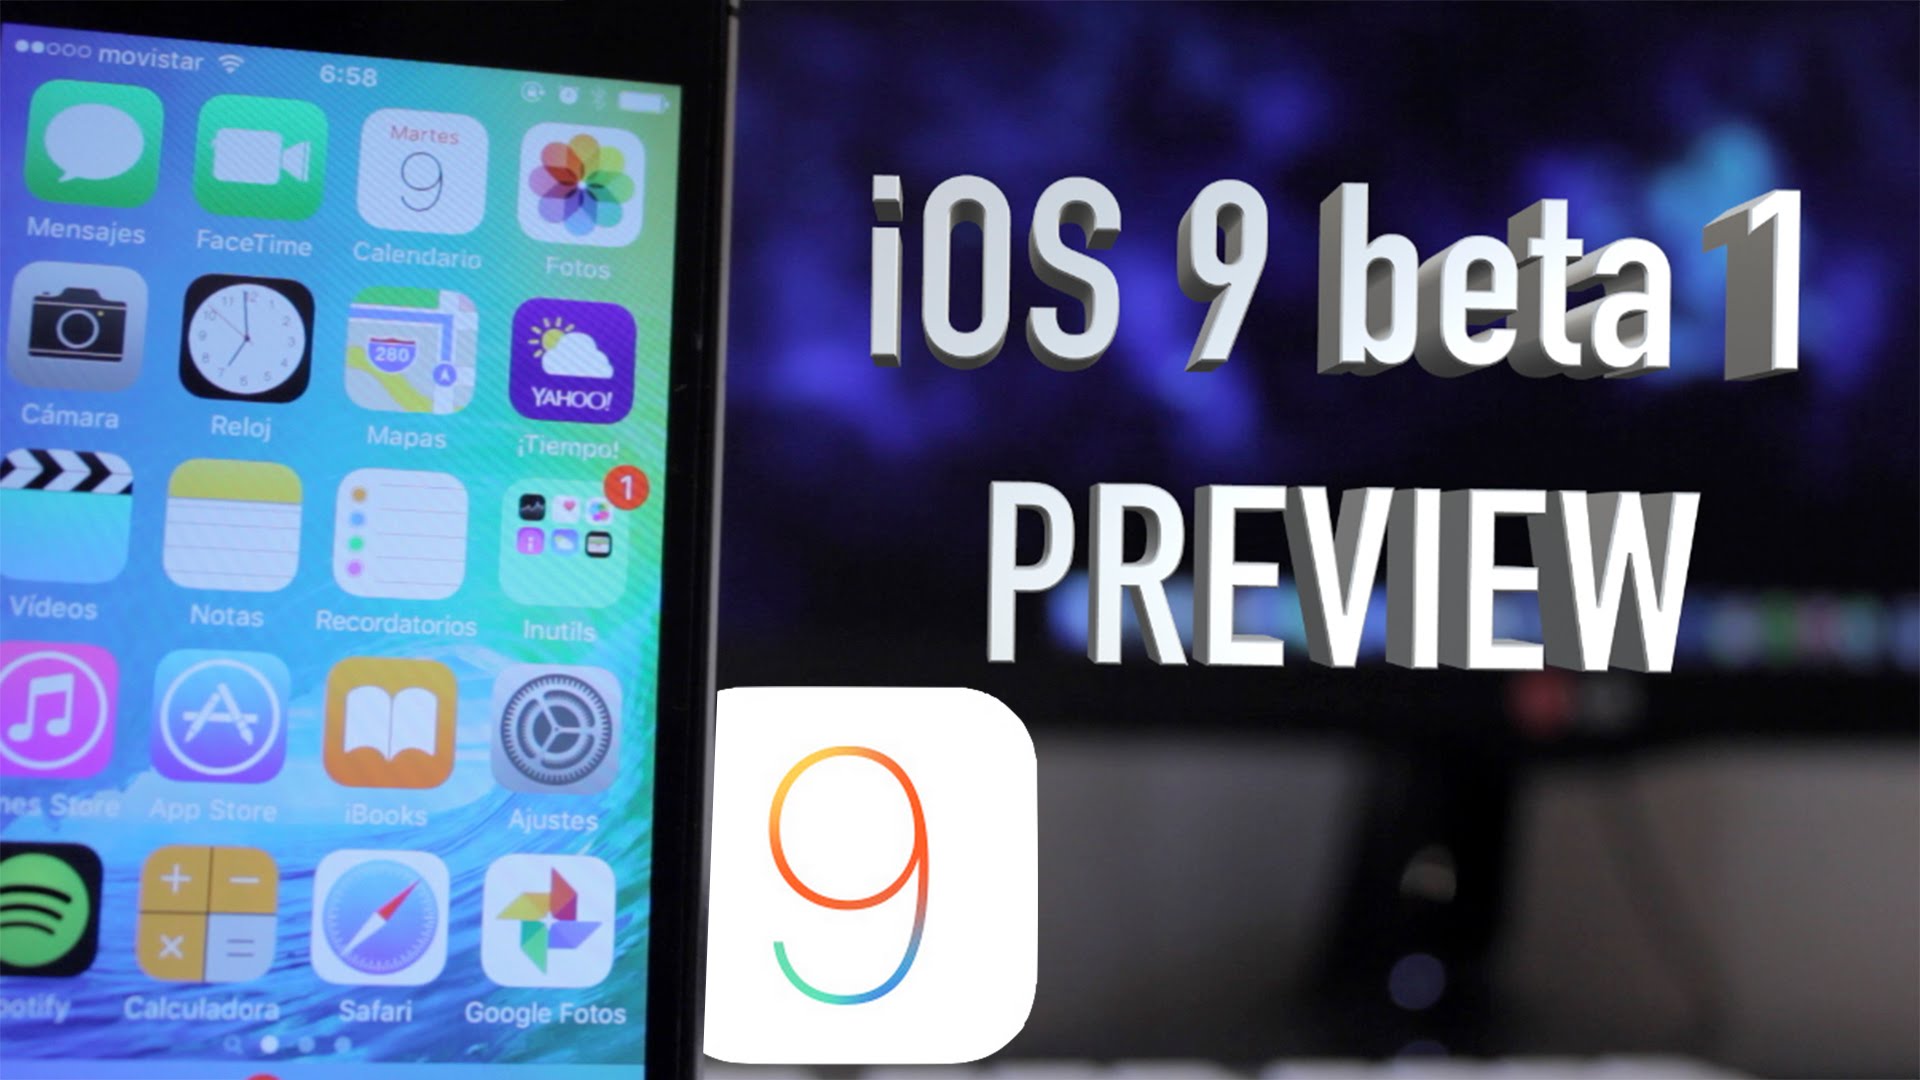 iOS 9 beta 1 Preview de TecCatalà